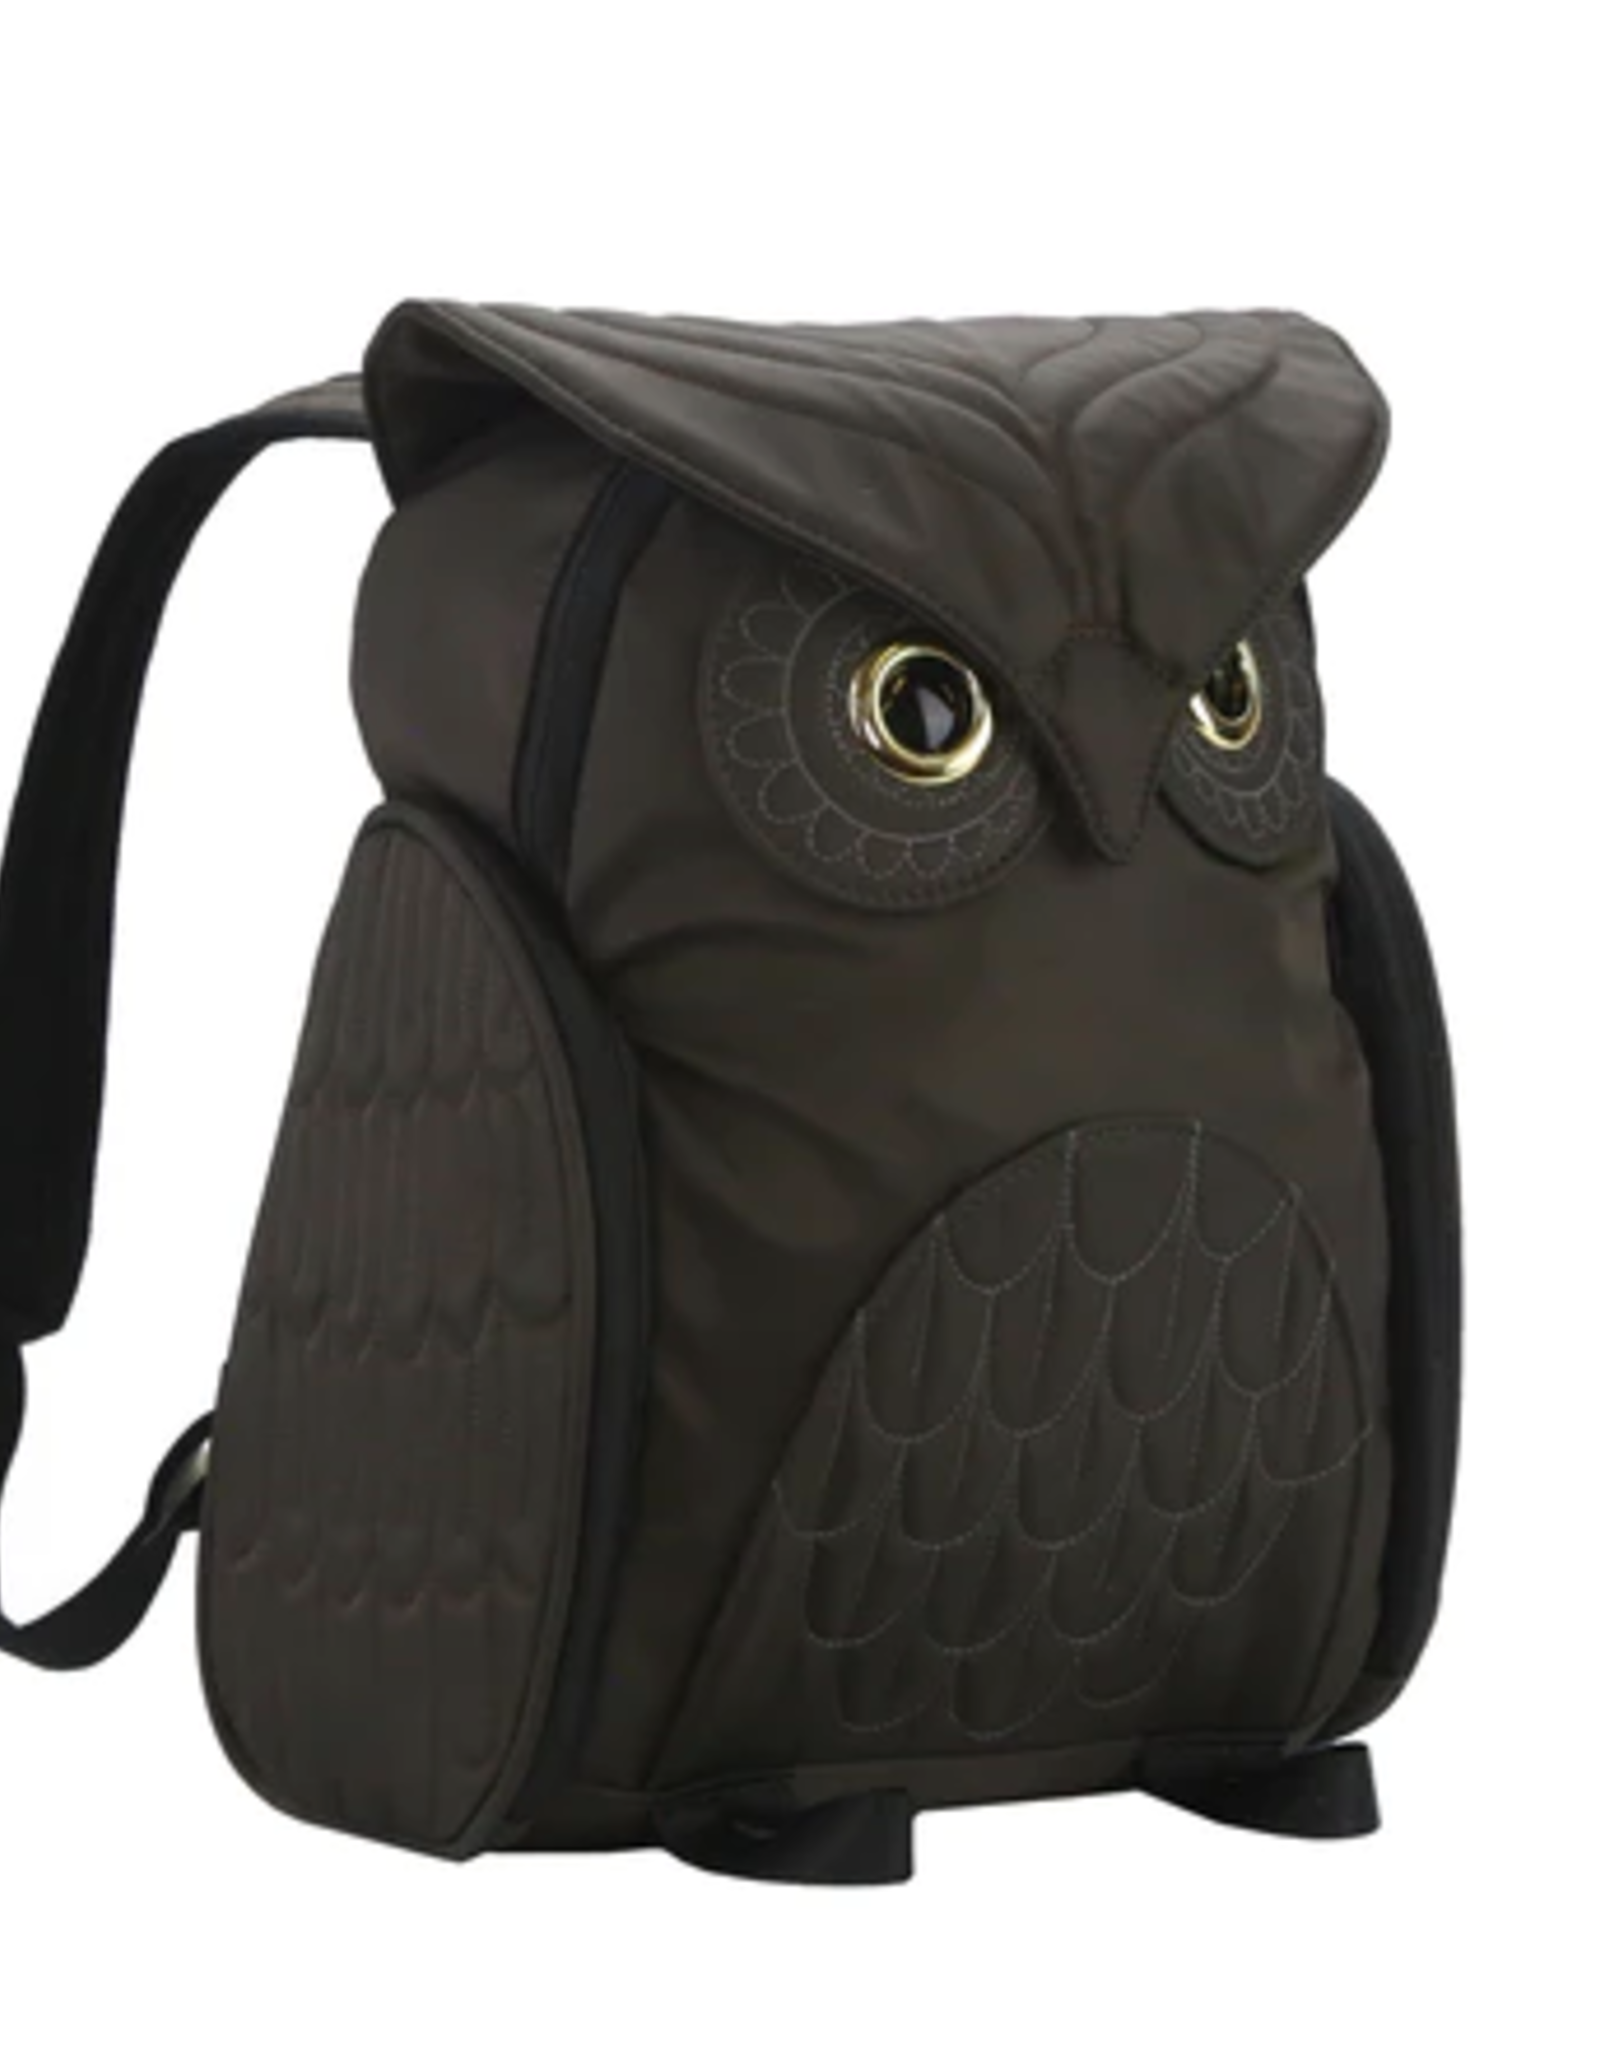 Darling's DCBN355 Owl Backpack